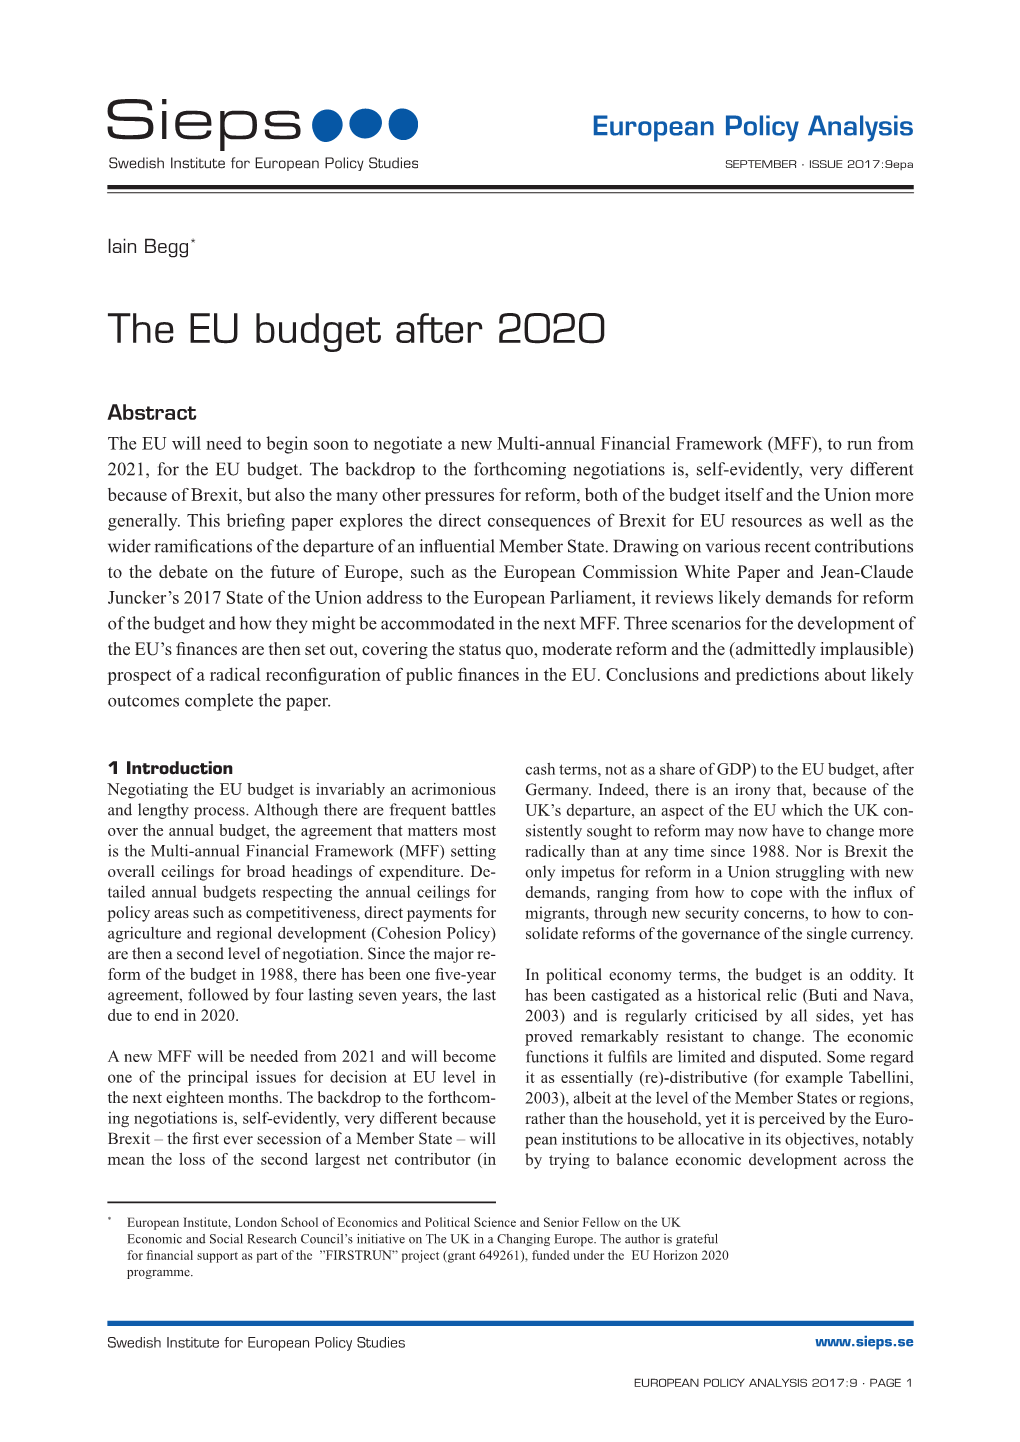 The EU Budget After 2020